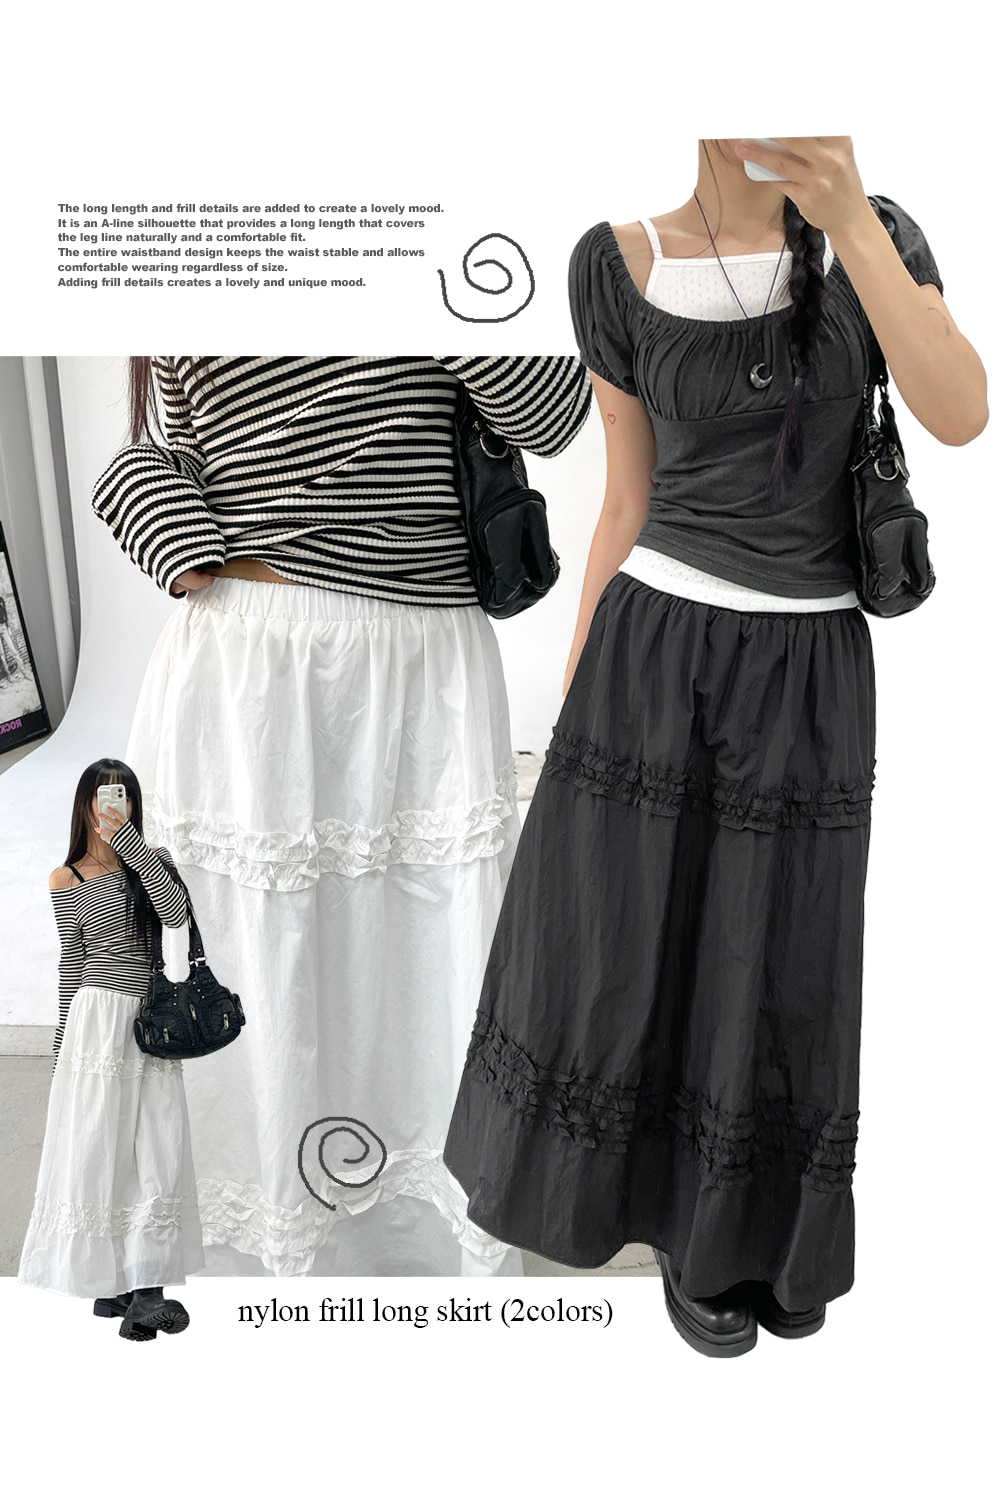 nylon frill long skirt (2colors)